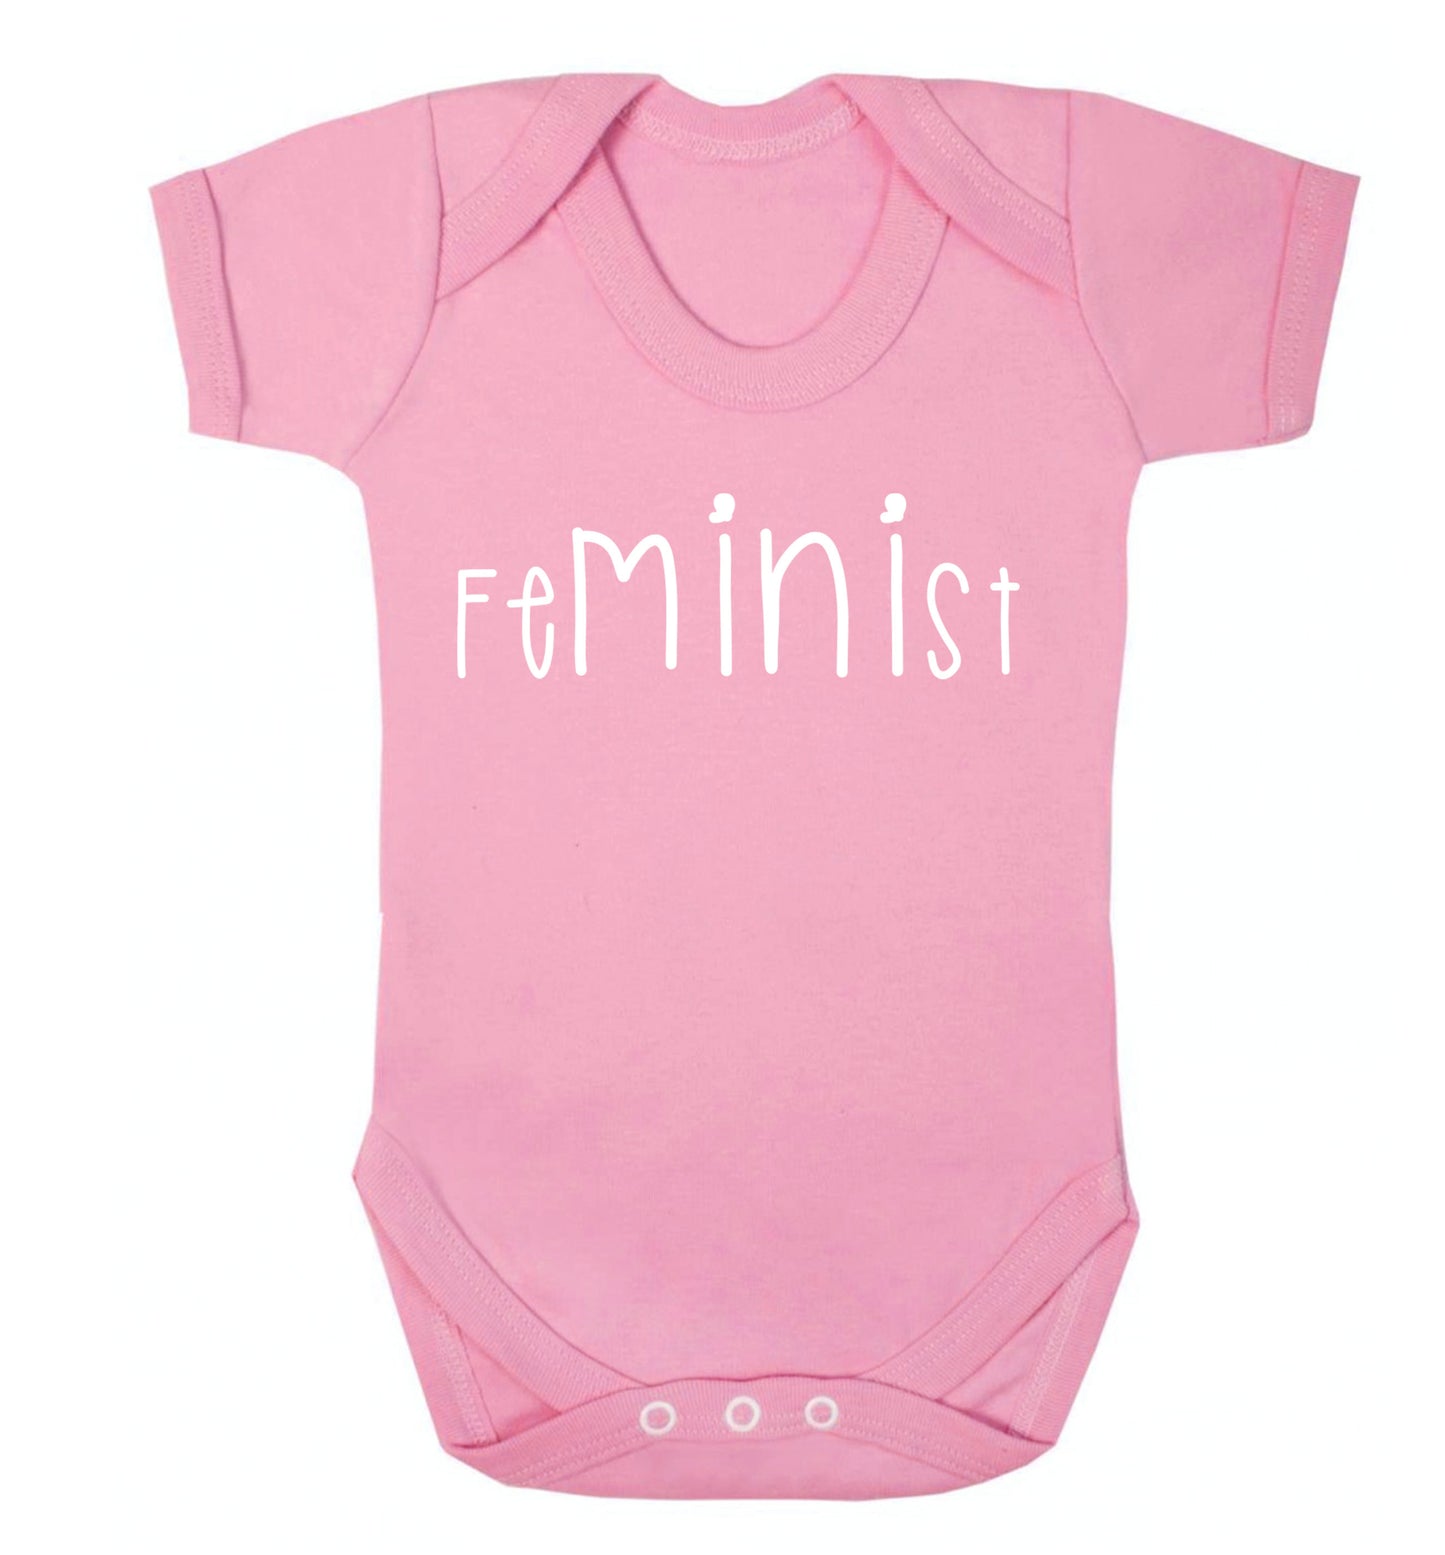 FeMINIst Baby Vest pale pink 18-24 months